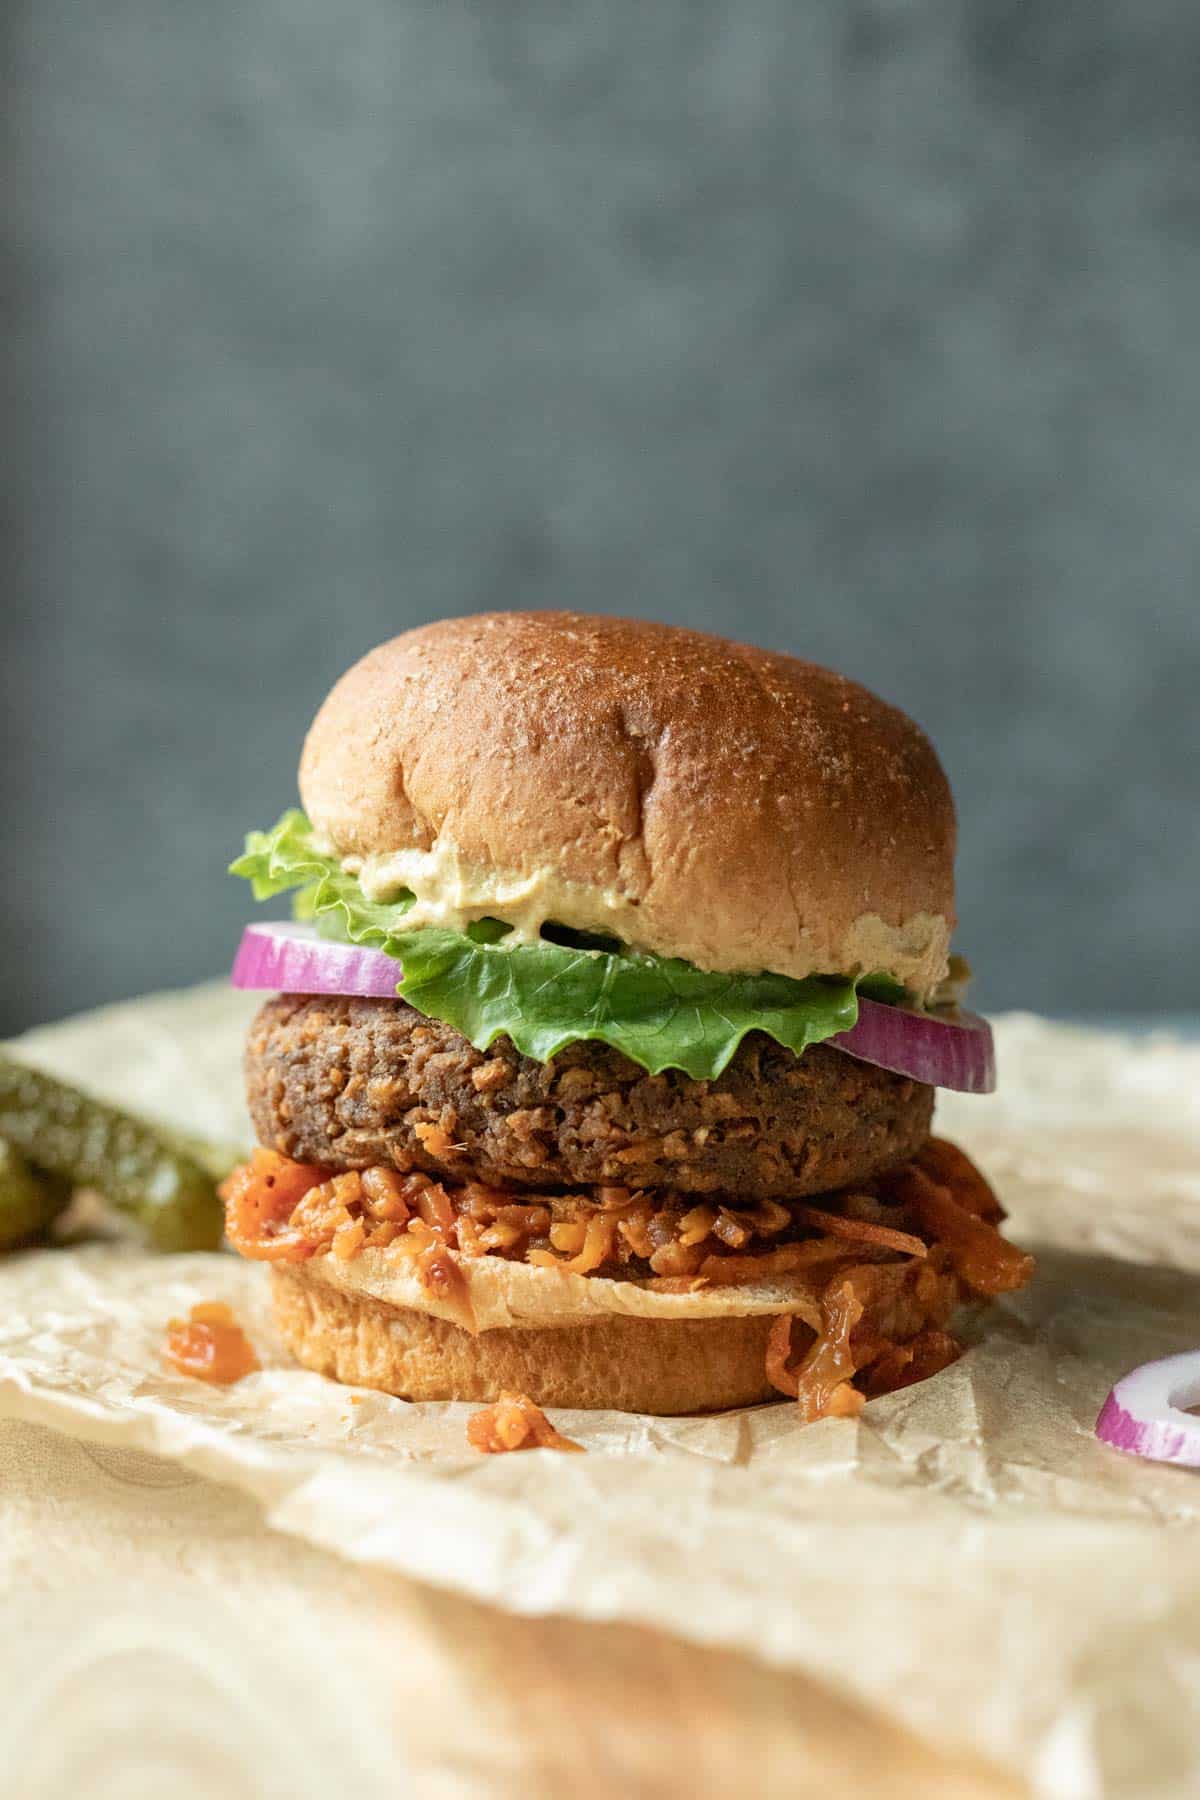 A loaded veggie burger on a bun against a blue background.